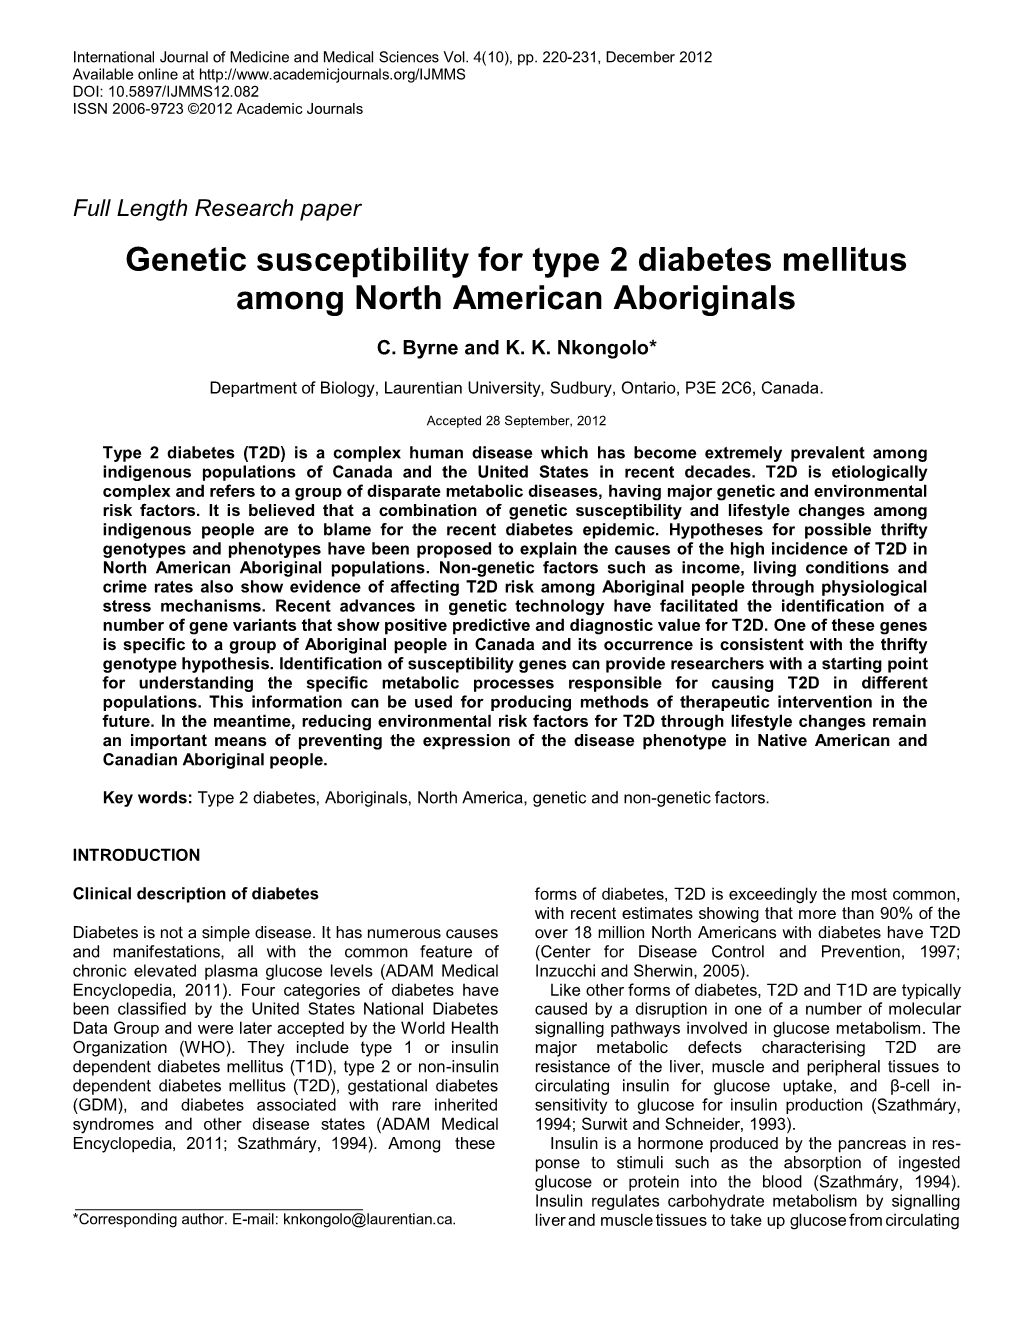 Genetic Susceptibility for Type 2 Diabetes Mellitus Among North American Aboriginals